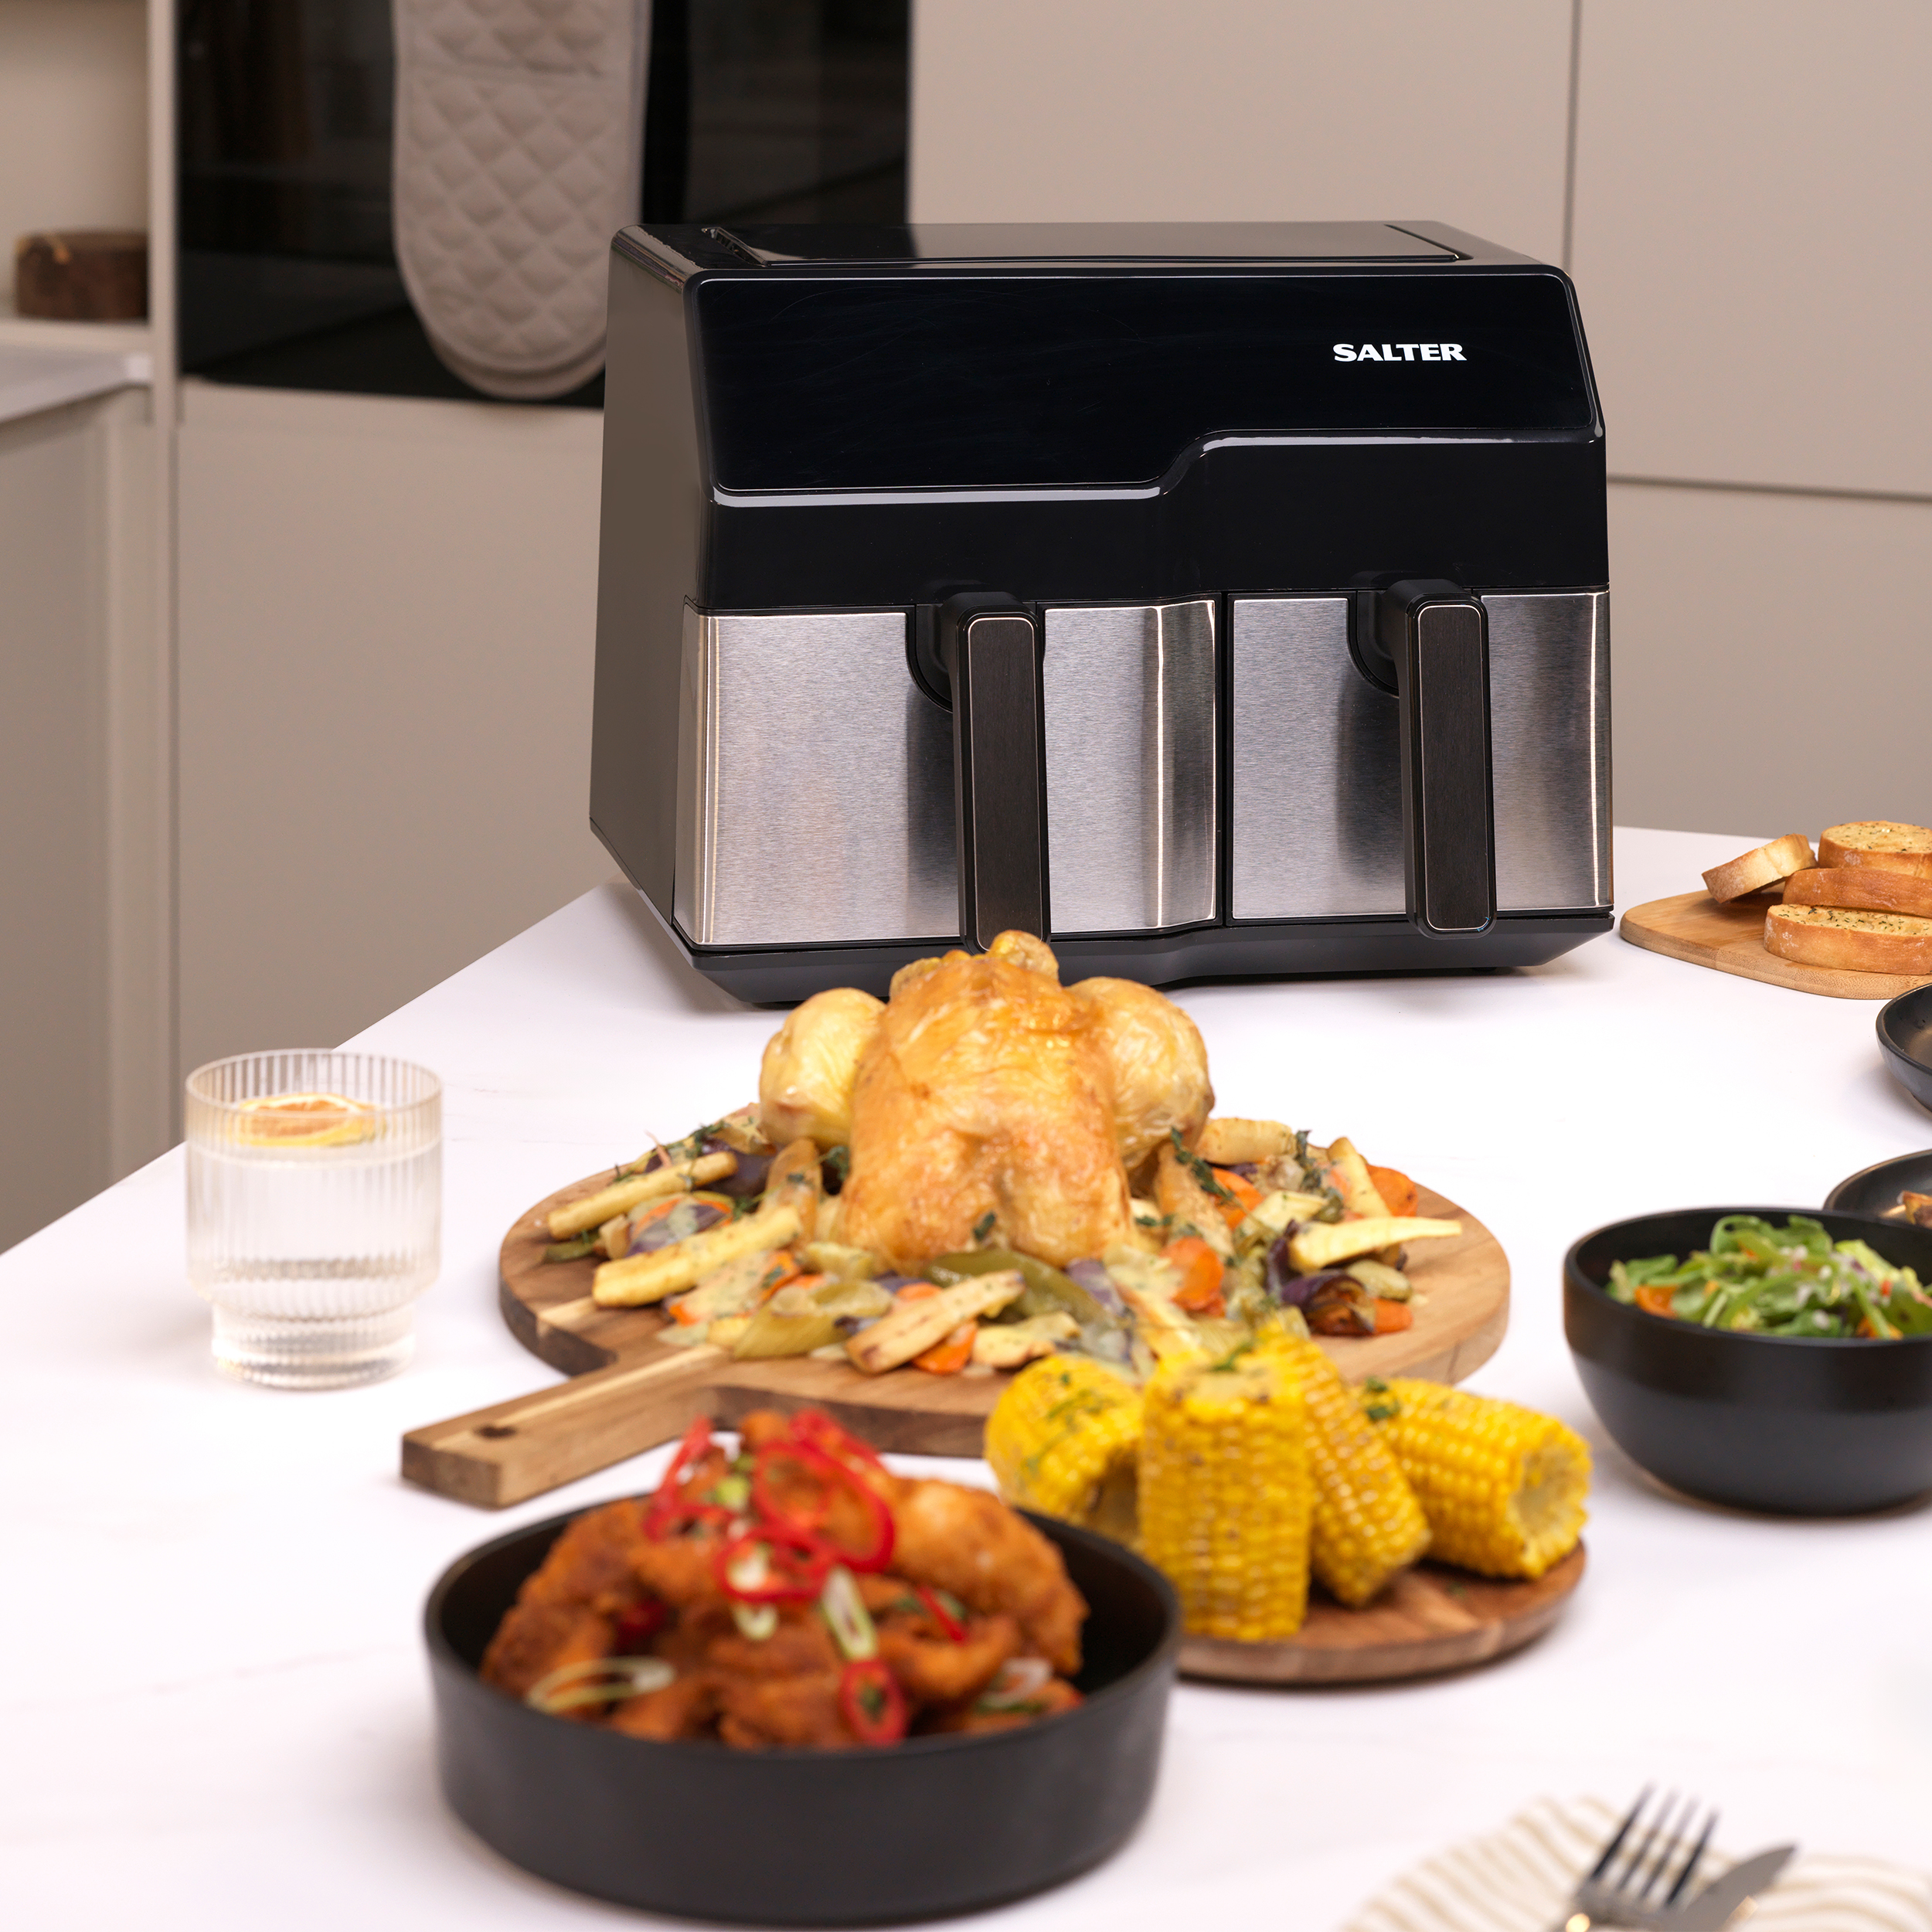 A Salter Digital Steam Air Fryer with chicken corn other foods in a kitchen